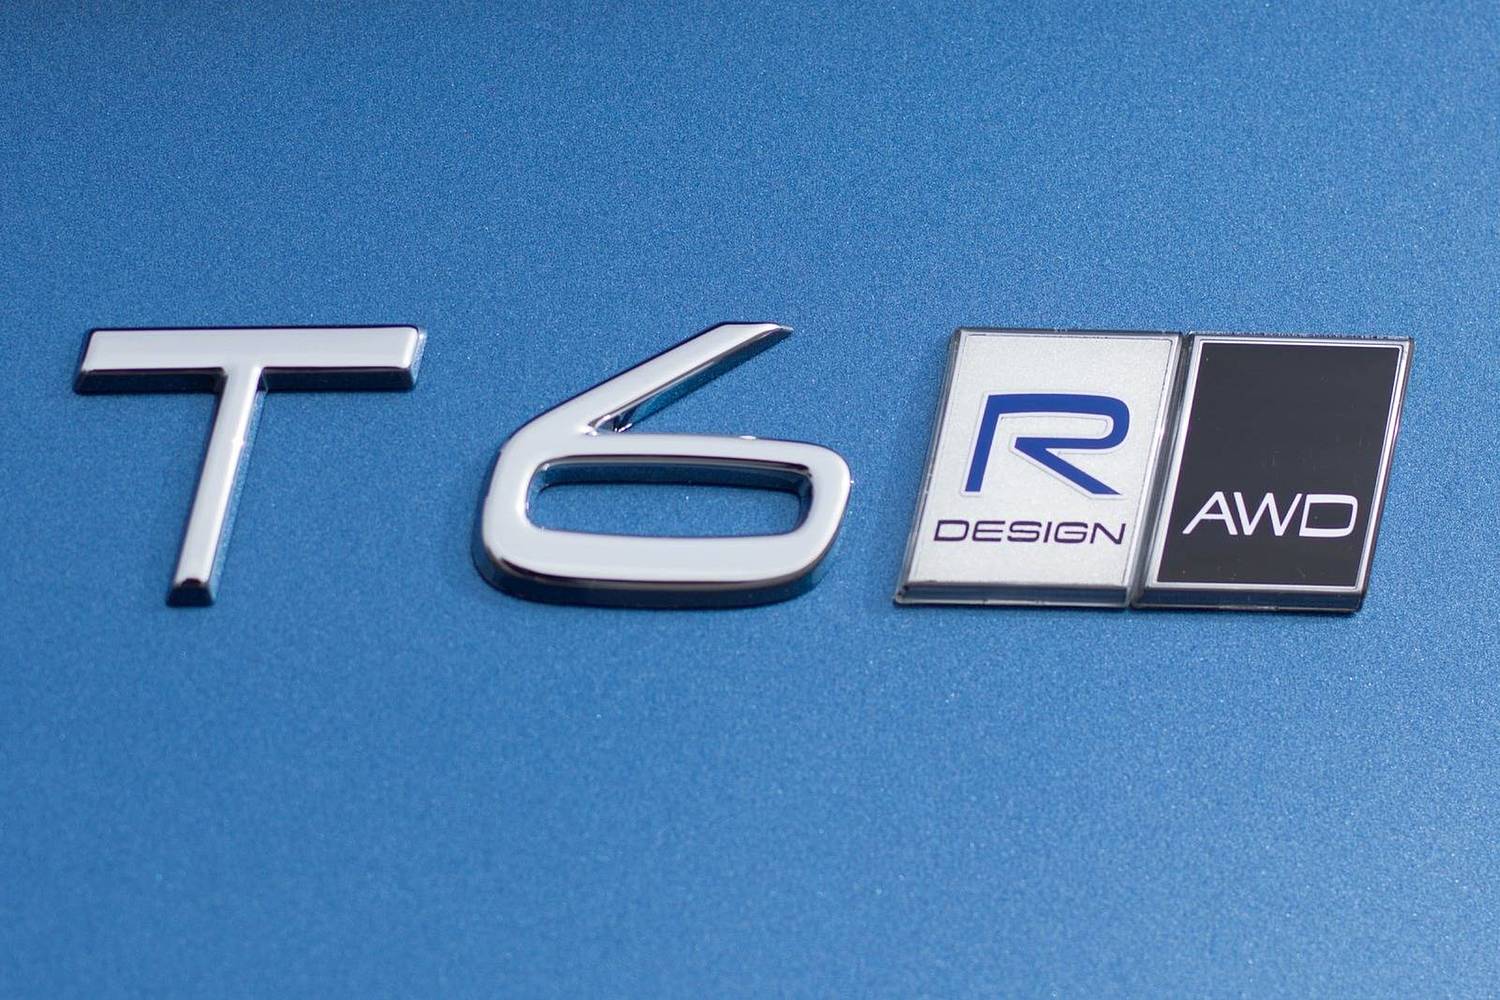 Volvo XC90 T6 R-Design 4dr SUV Rear Badge (2016 model year shown)